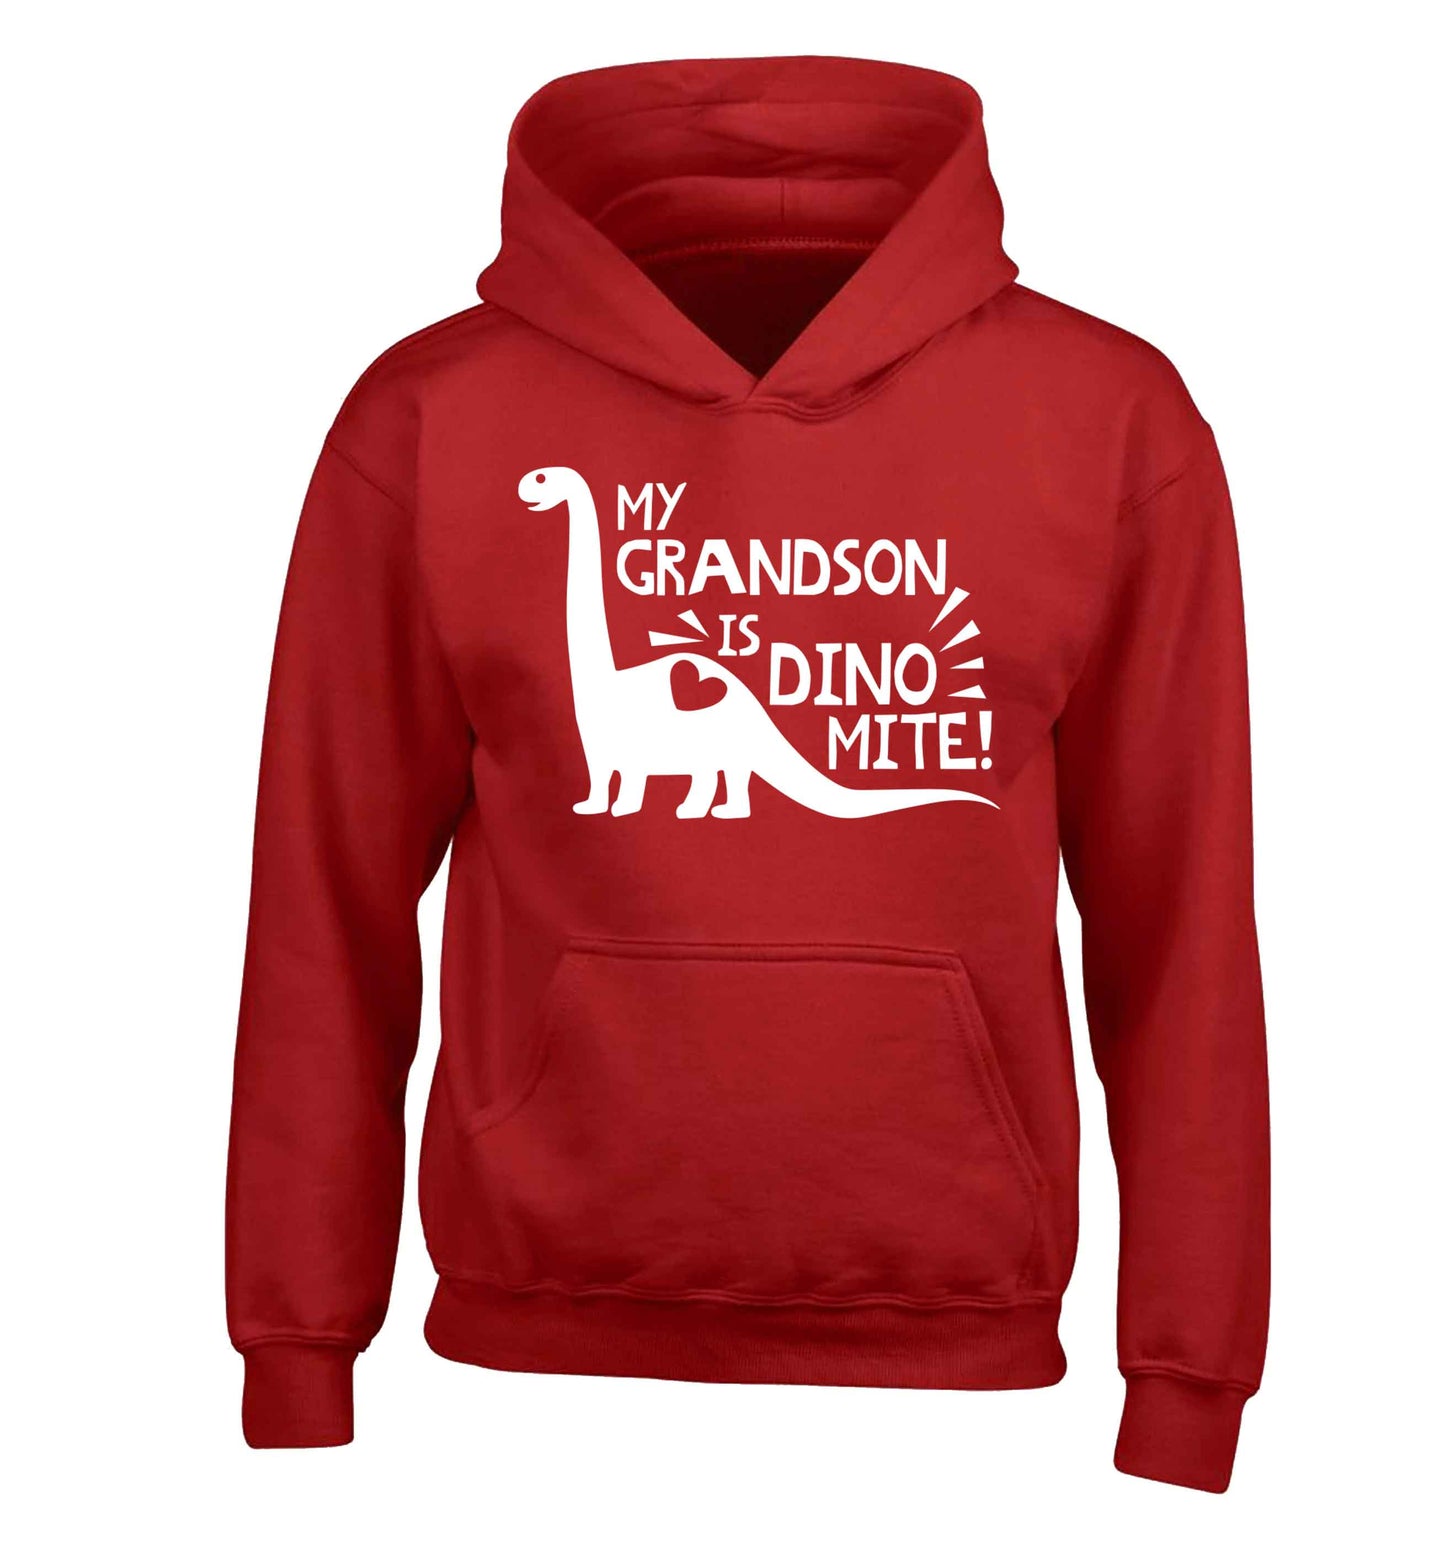 My grandson is dinomite! children's red hoodie 12-13 Years